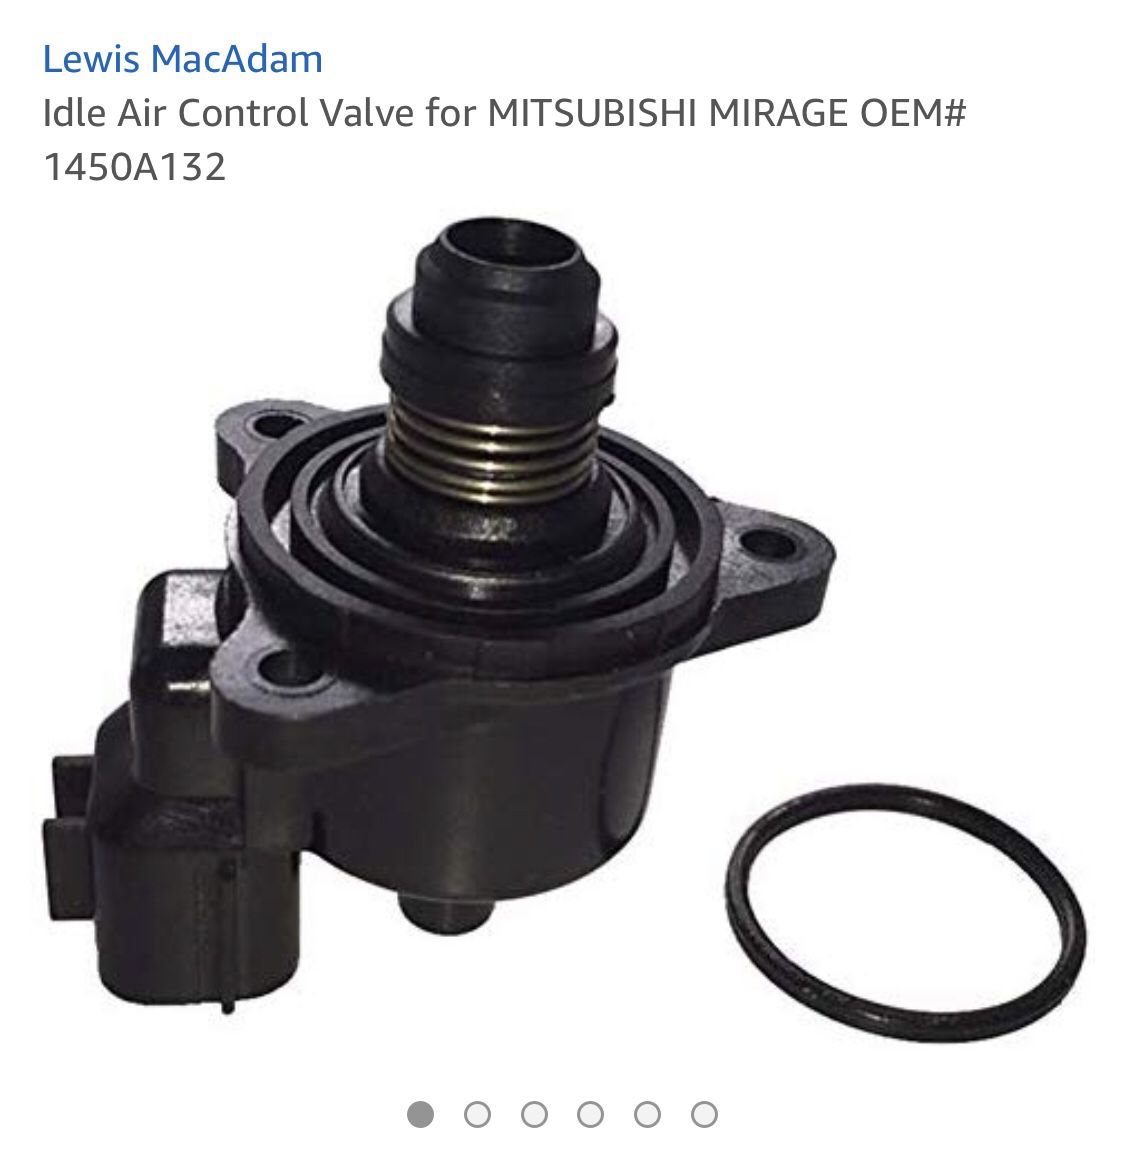 Mitsubishi Mirage OEM # 1450A132 idle air control valve brand new